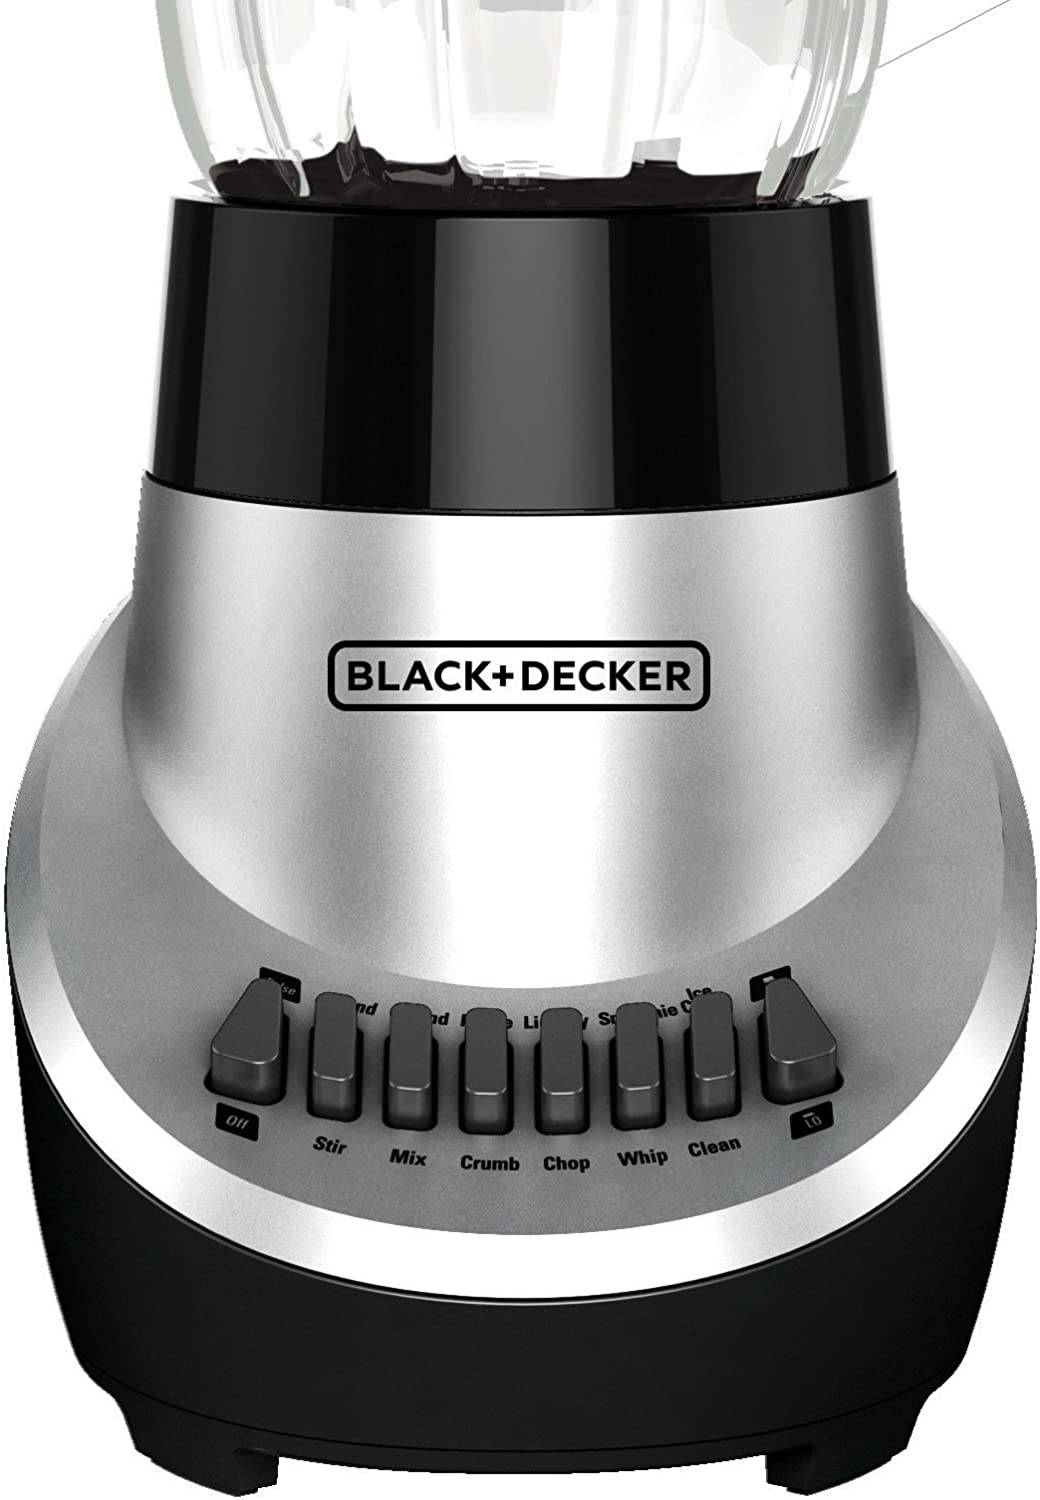 BLACK+DECKER FusionBlade Blender with 6-Cup Glass Jar, Silver, BL1130SG -  Invastor